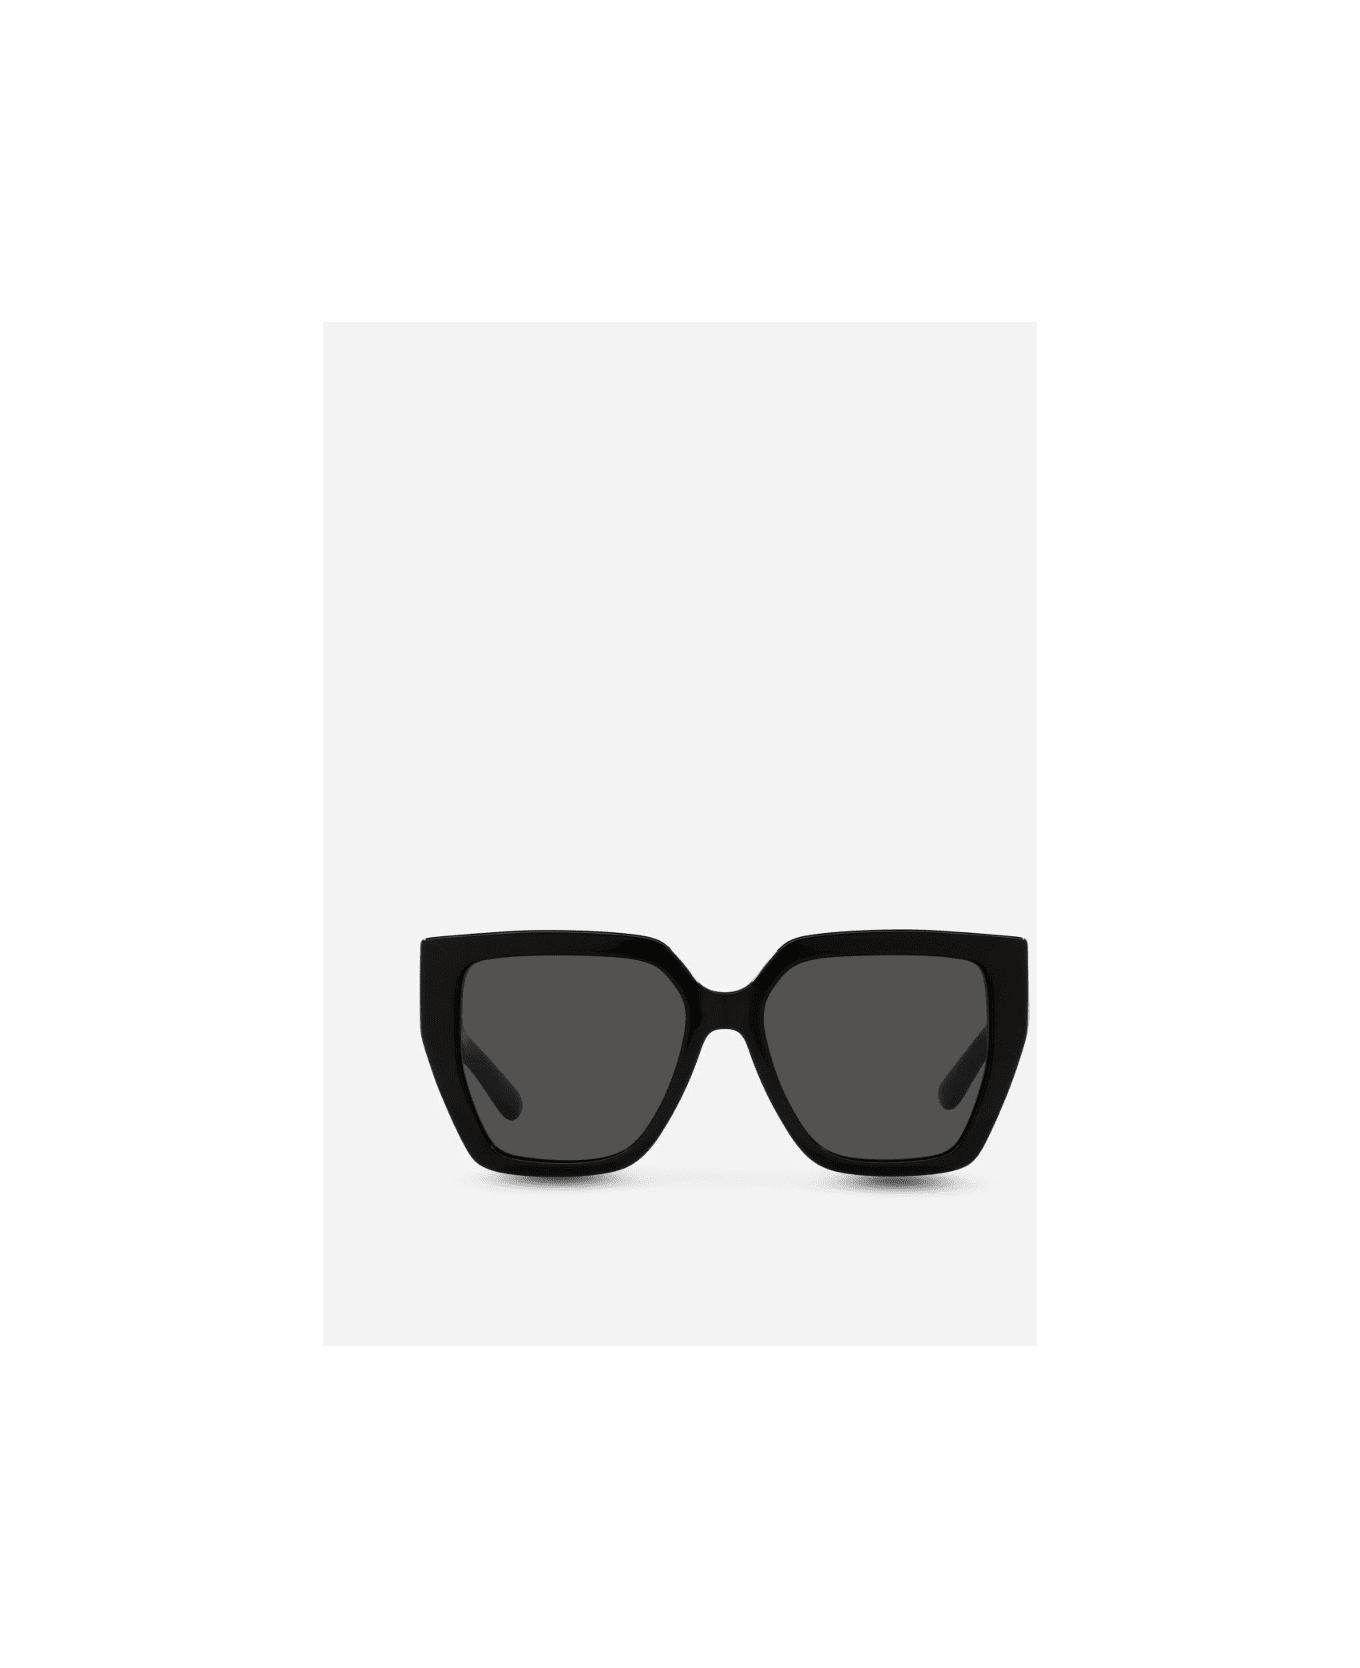 Dolce & Gabbana Eyewear DG4438 501/87 Sunglasses - Nero サングラス